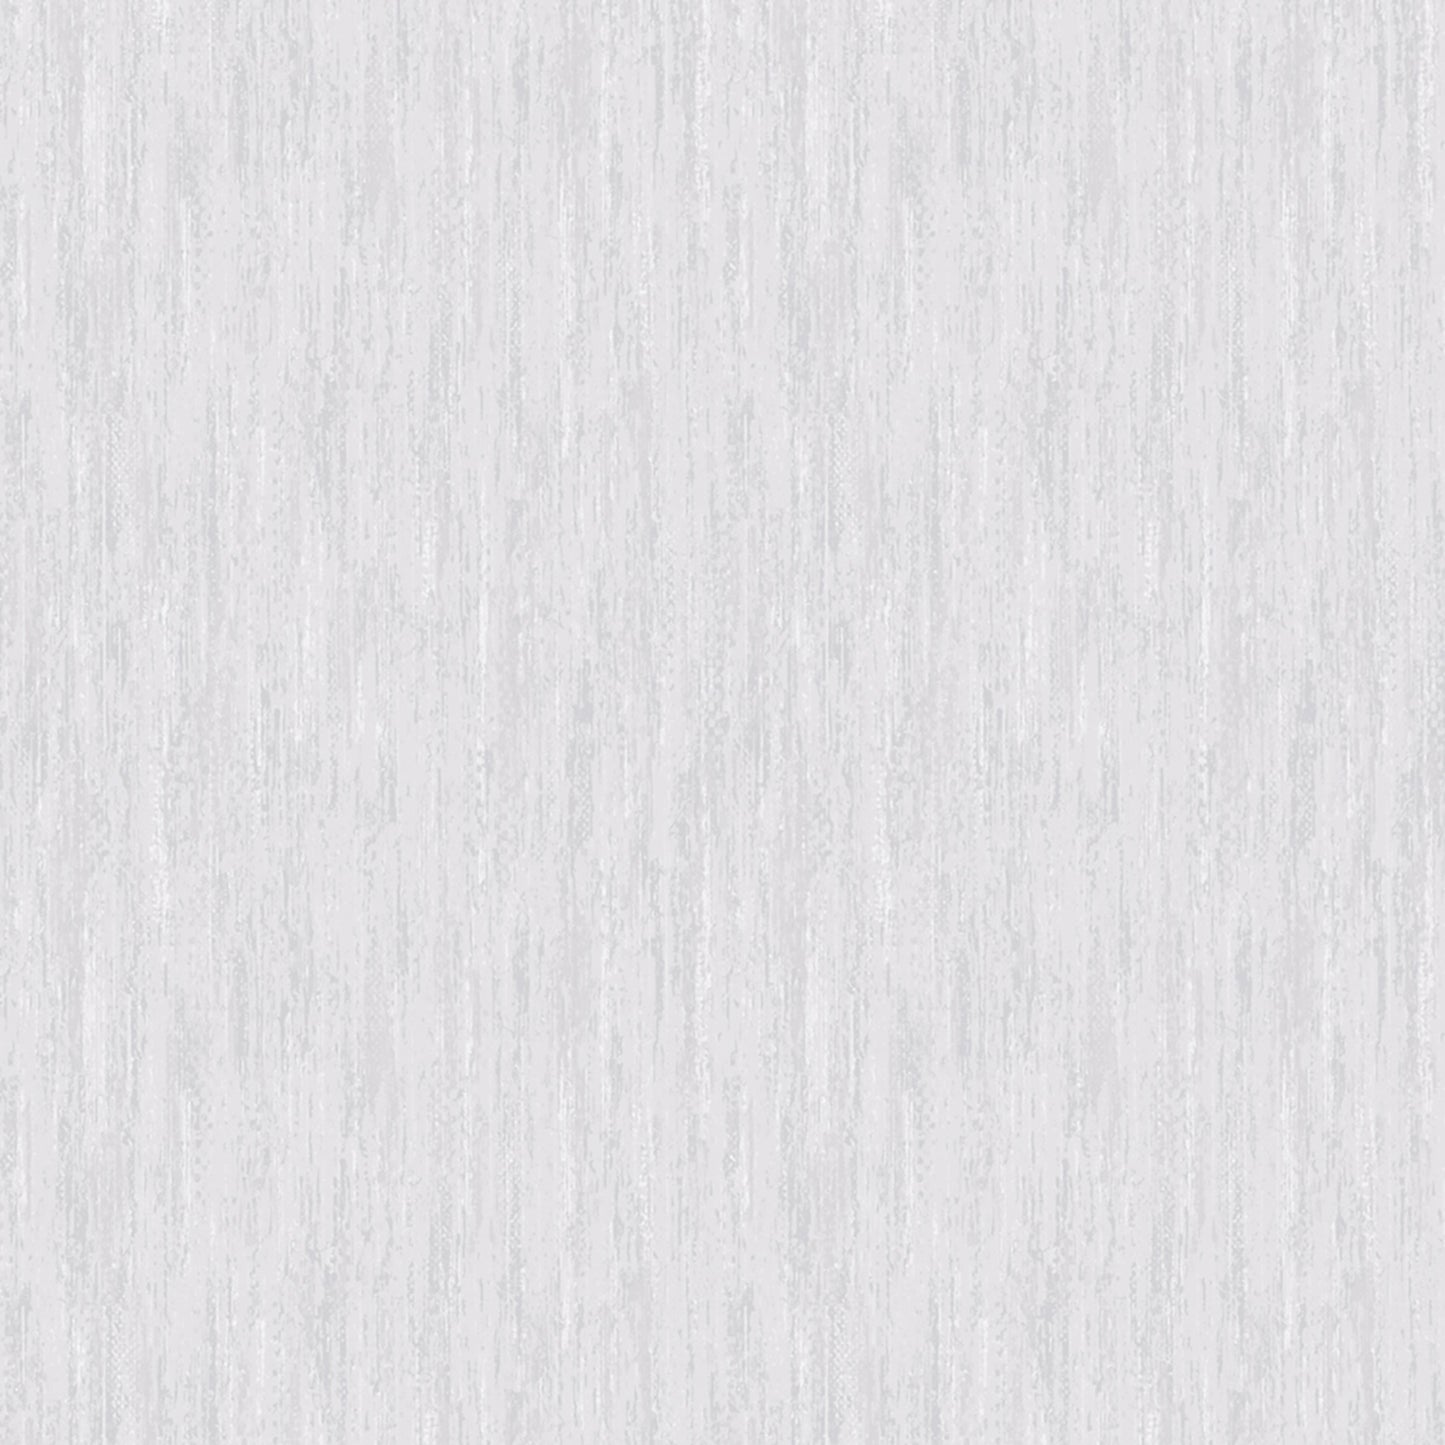 Looking 2814-M0735 Bath Greys Textured Wallpaper by Advantage